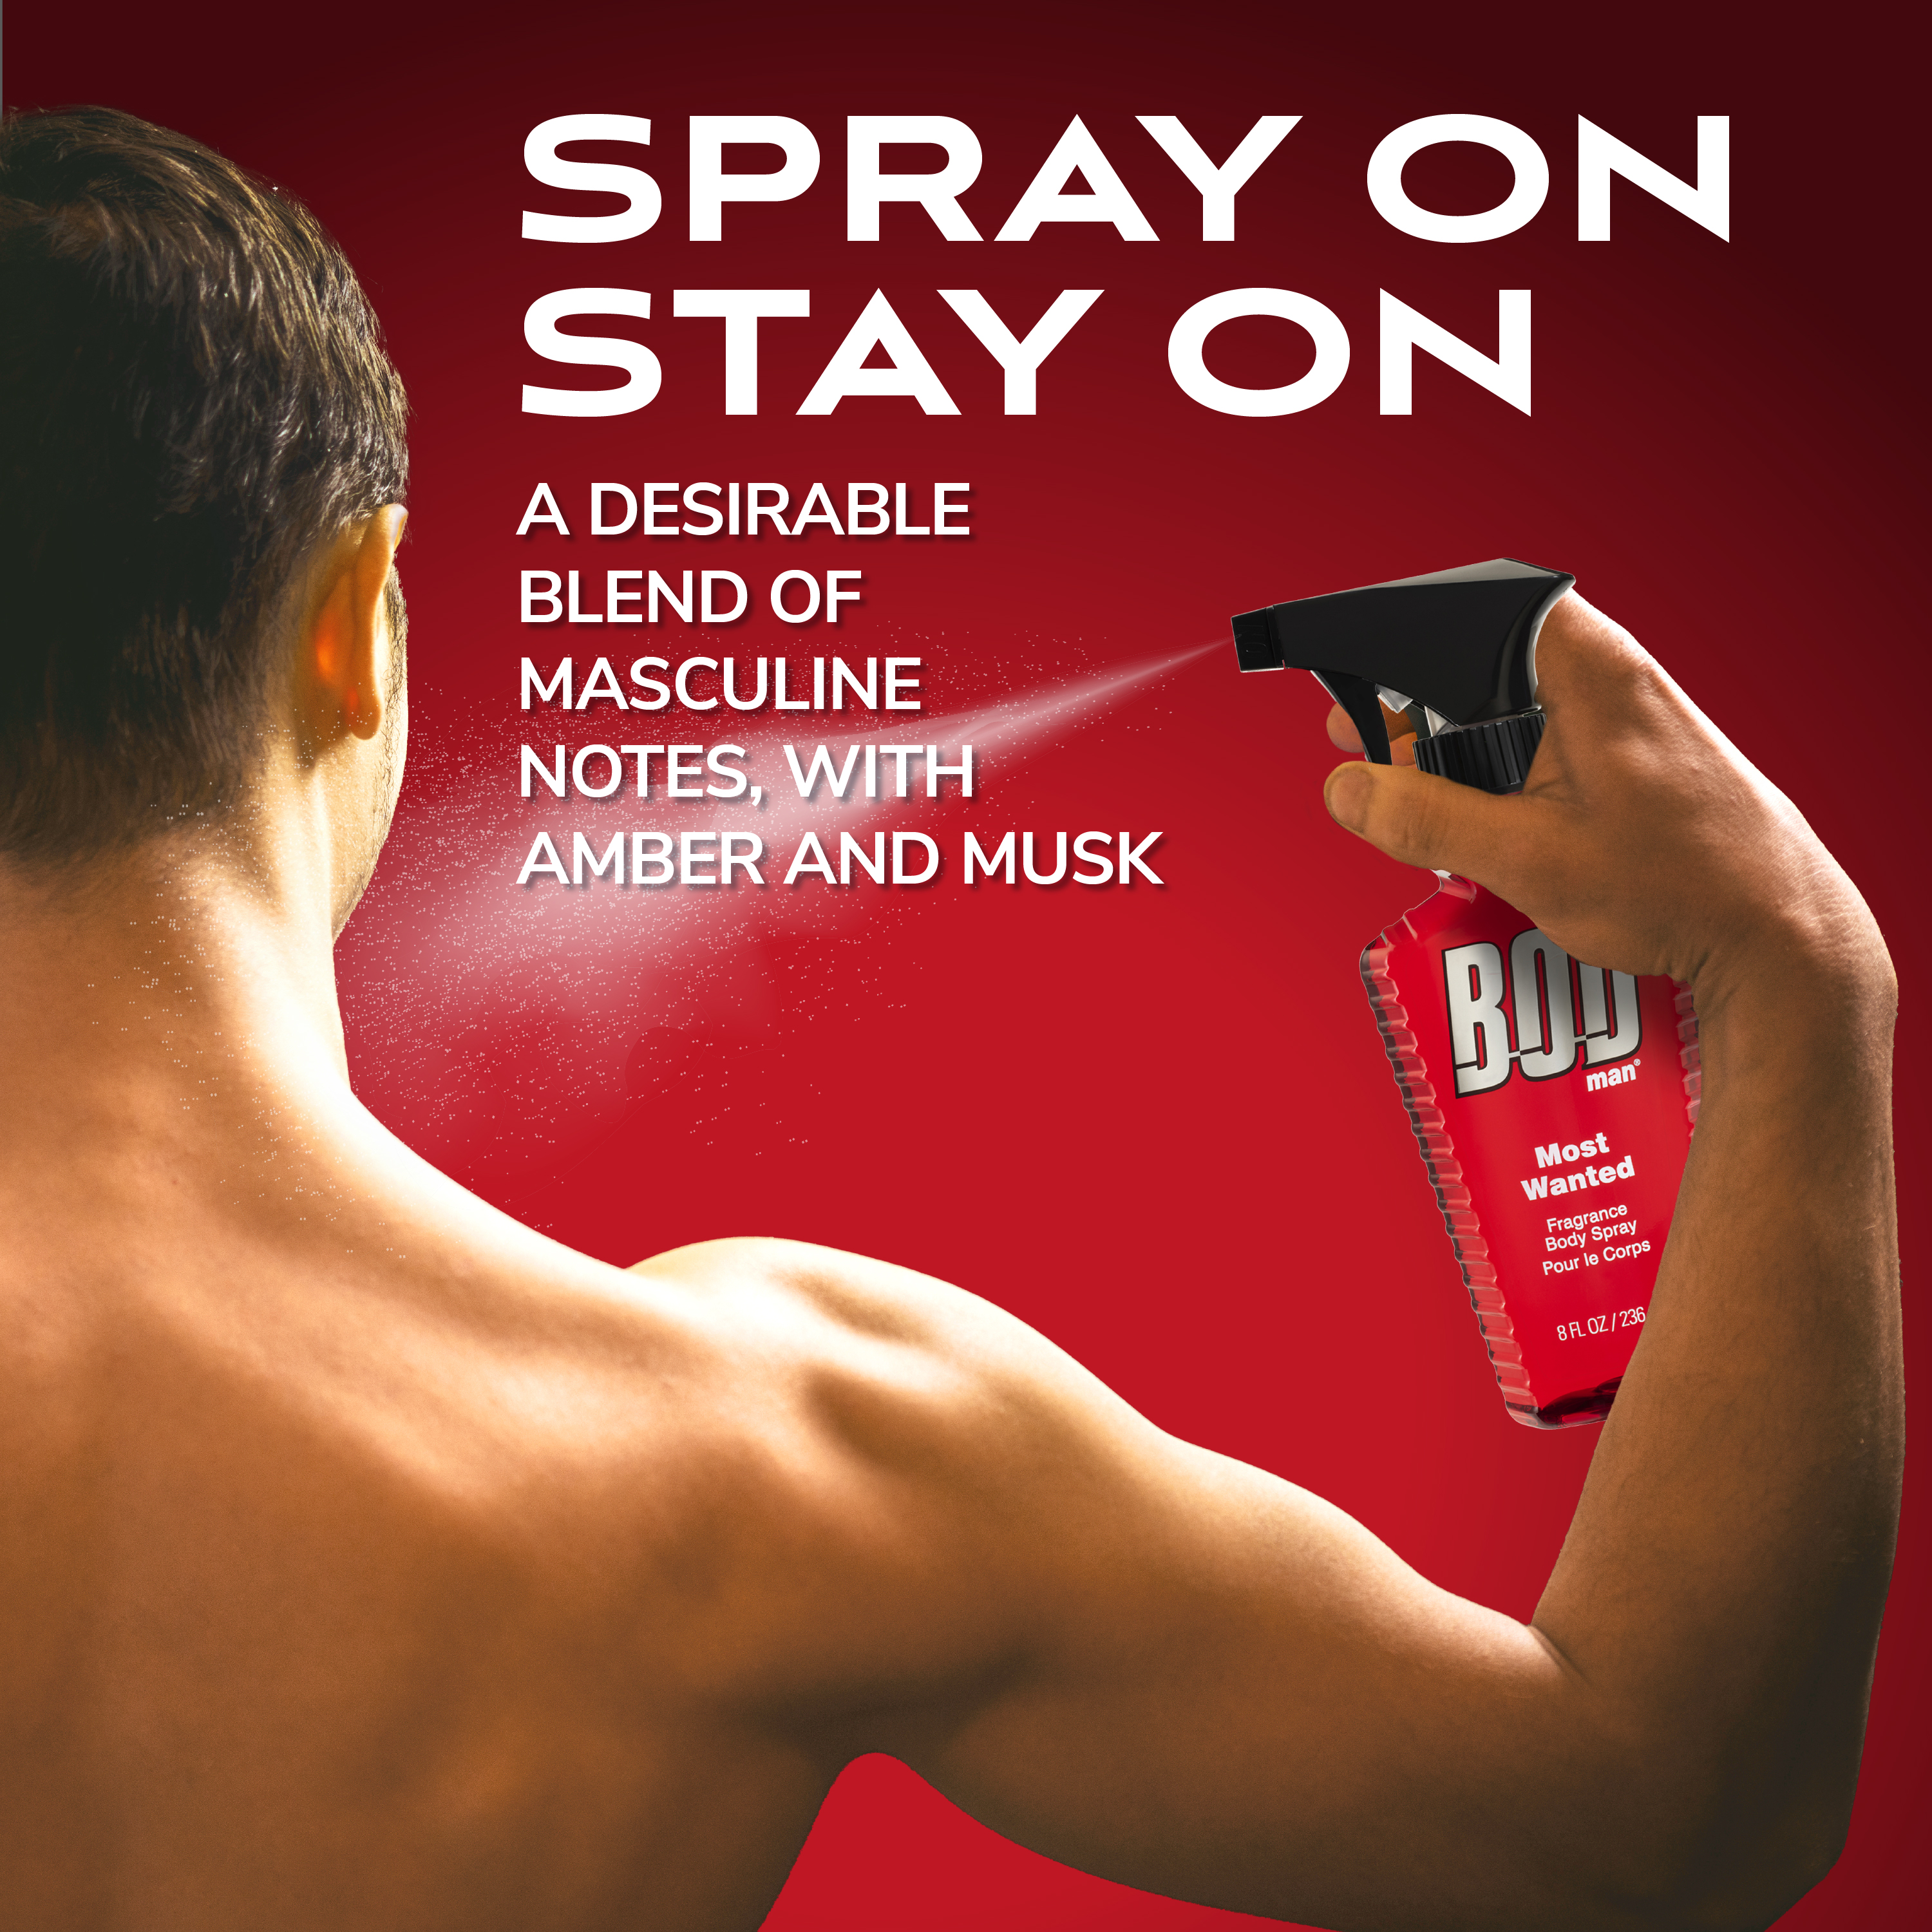 BOD Man Fragrance Body Spray, Most Wanted, 8 fl oz - image 5 of 7